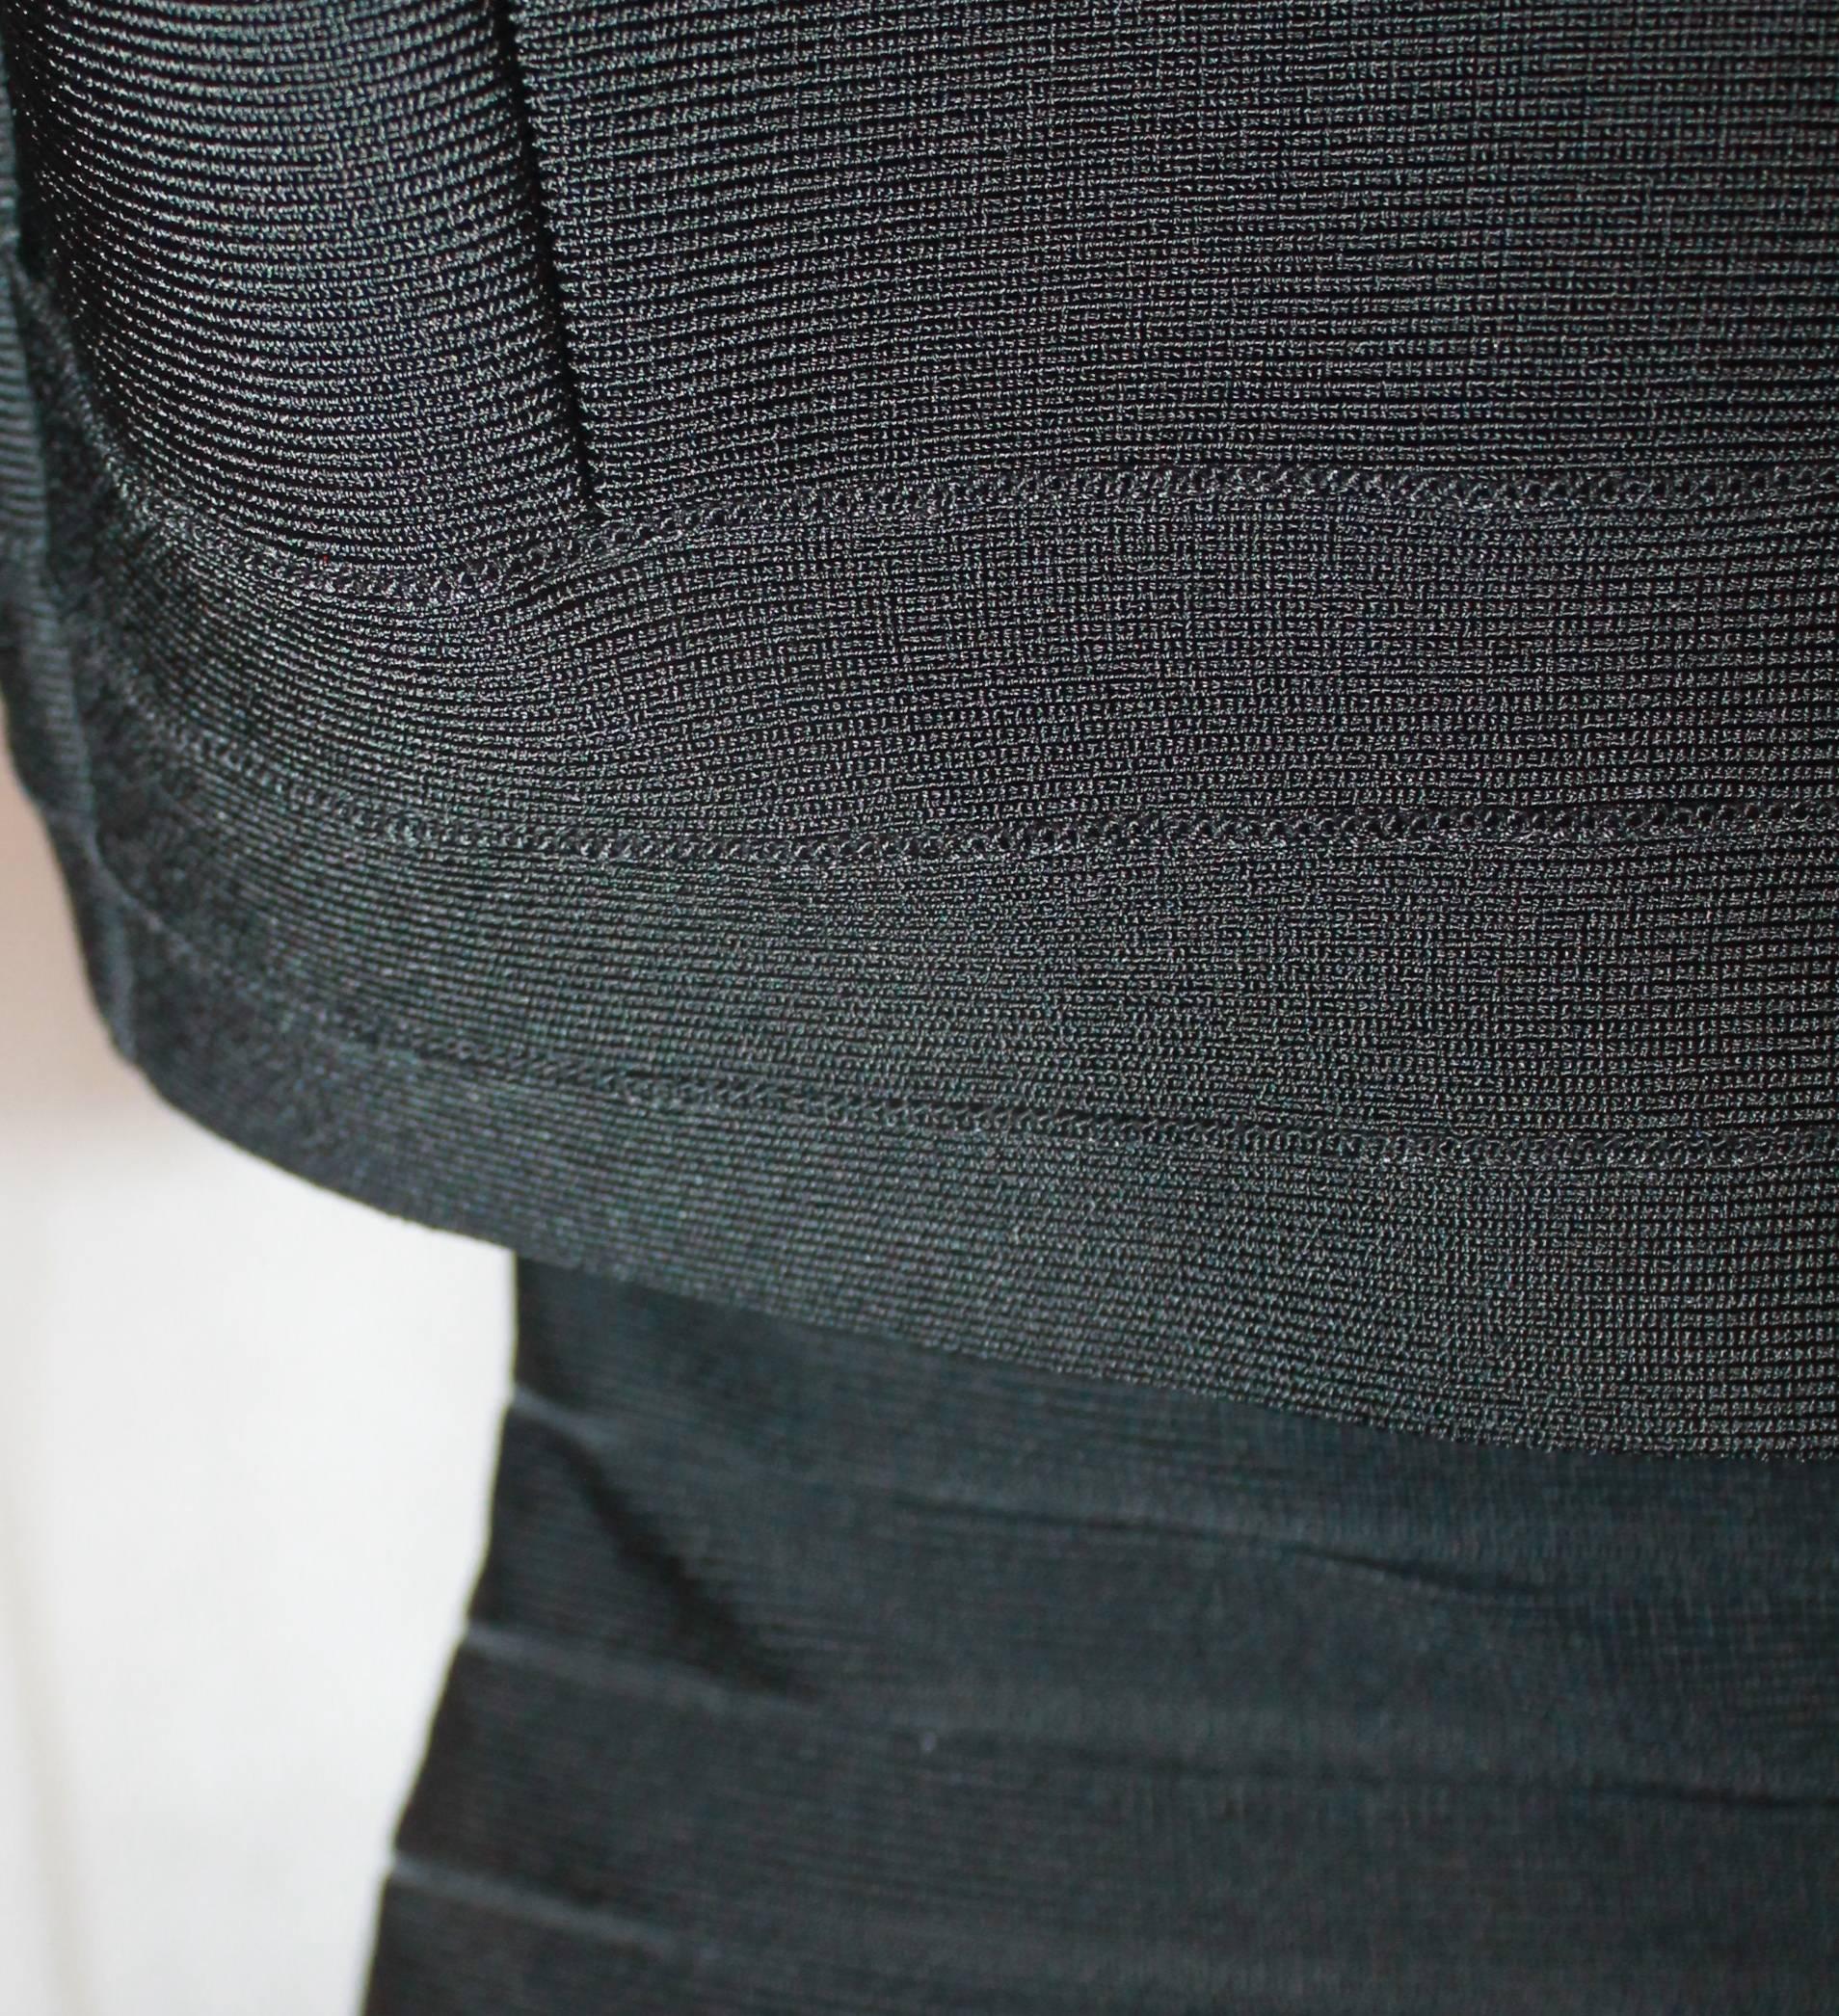 Herve Leger Black Horizontal Striped Spaghetti Strap Bandage Dress w/ Bolero - S 2